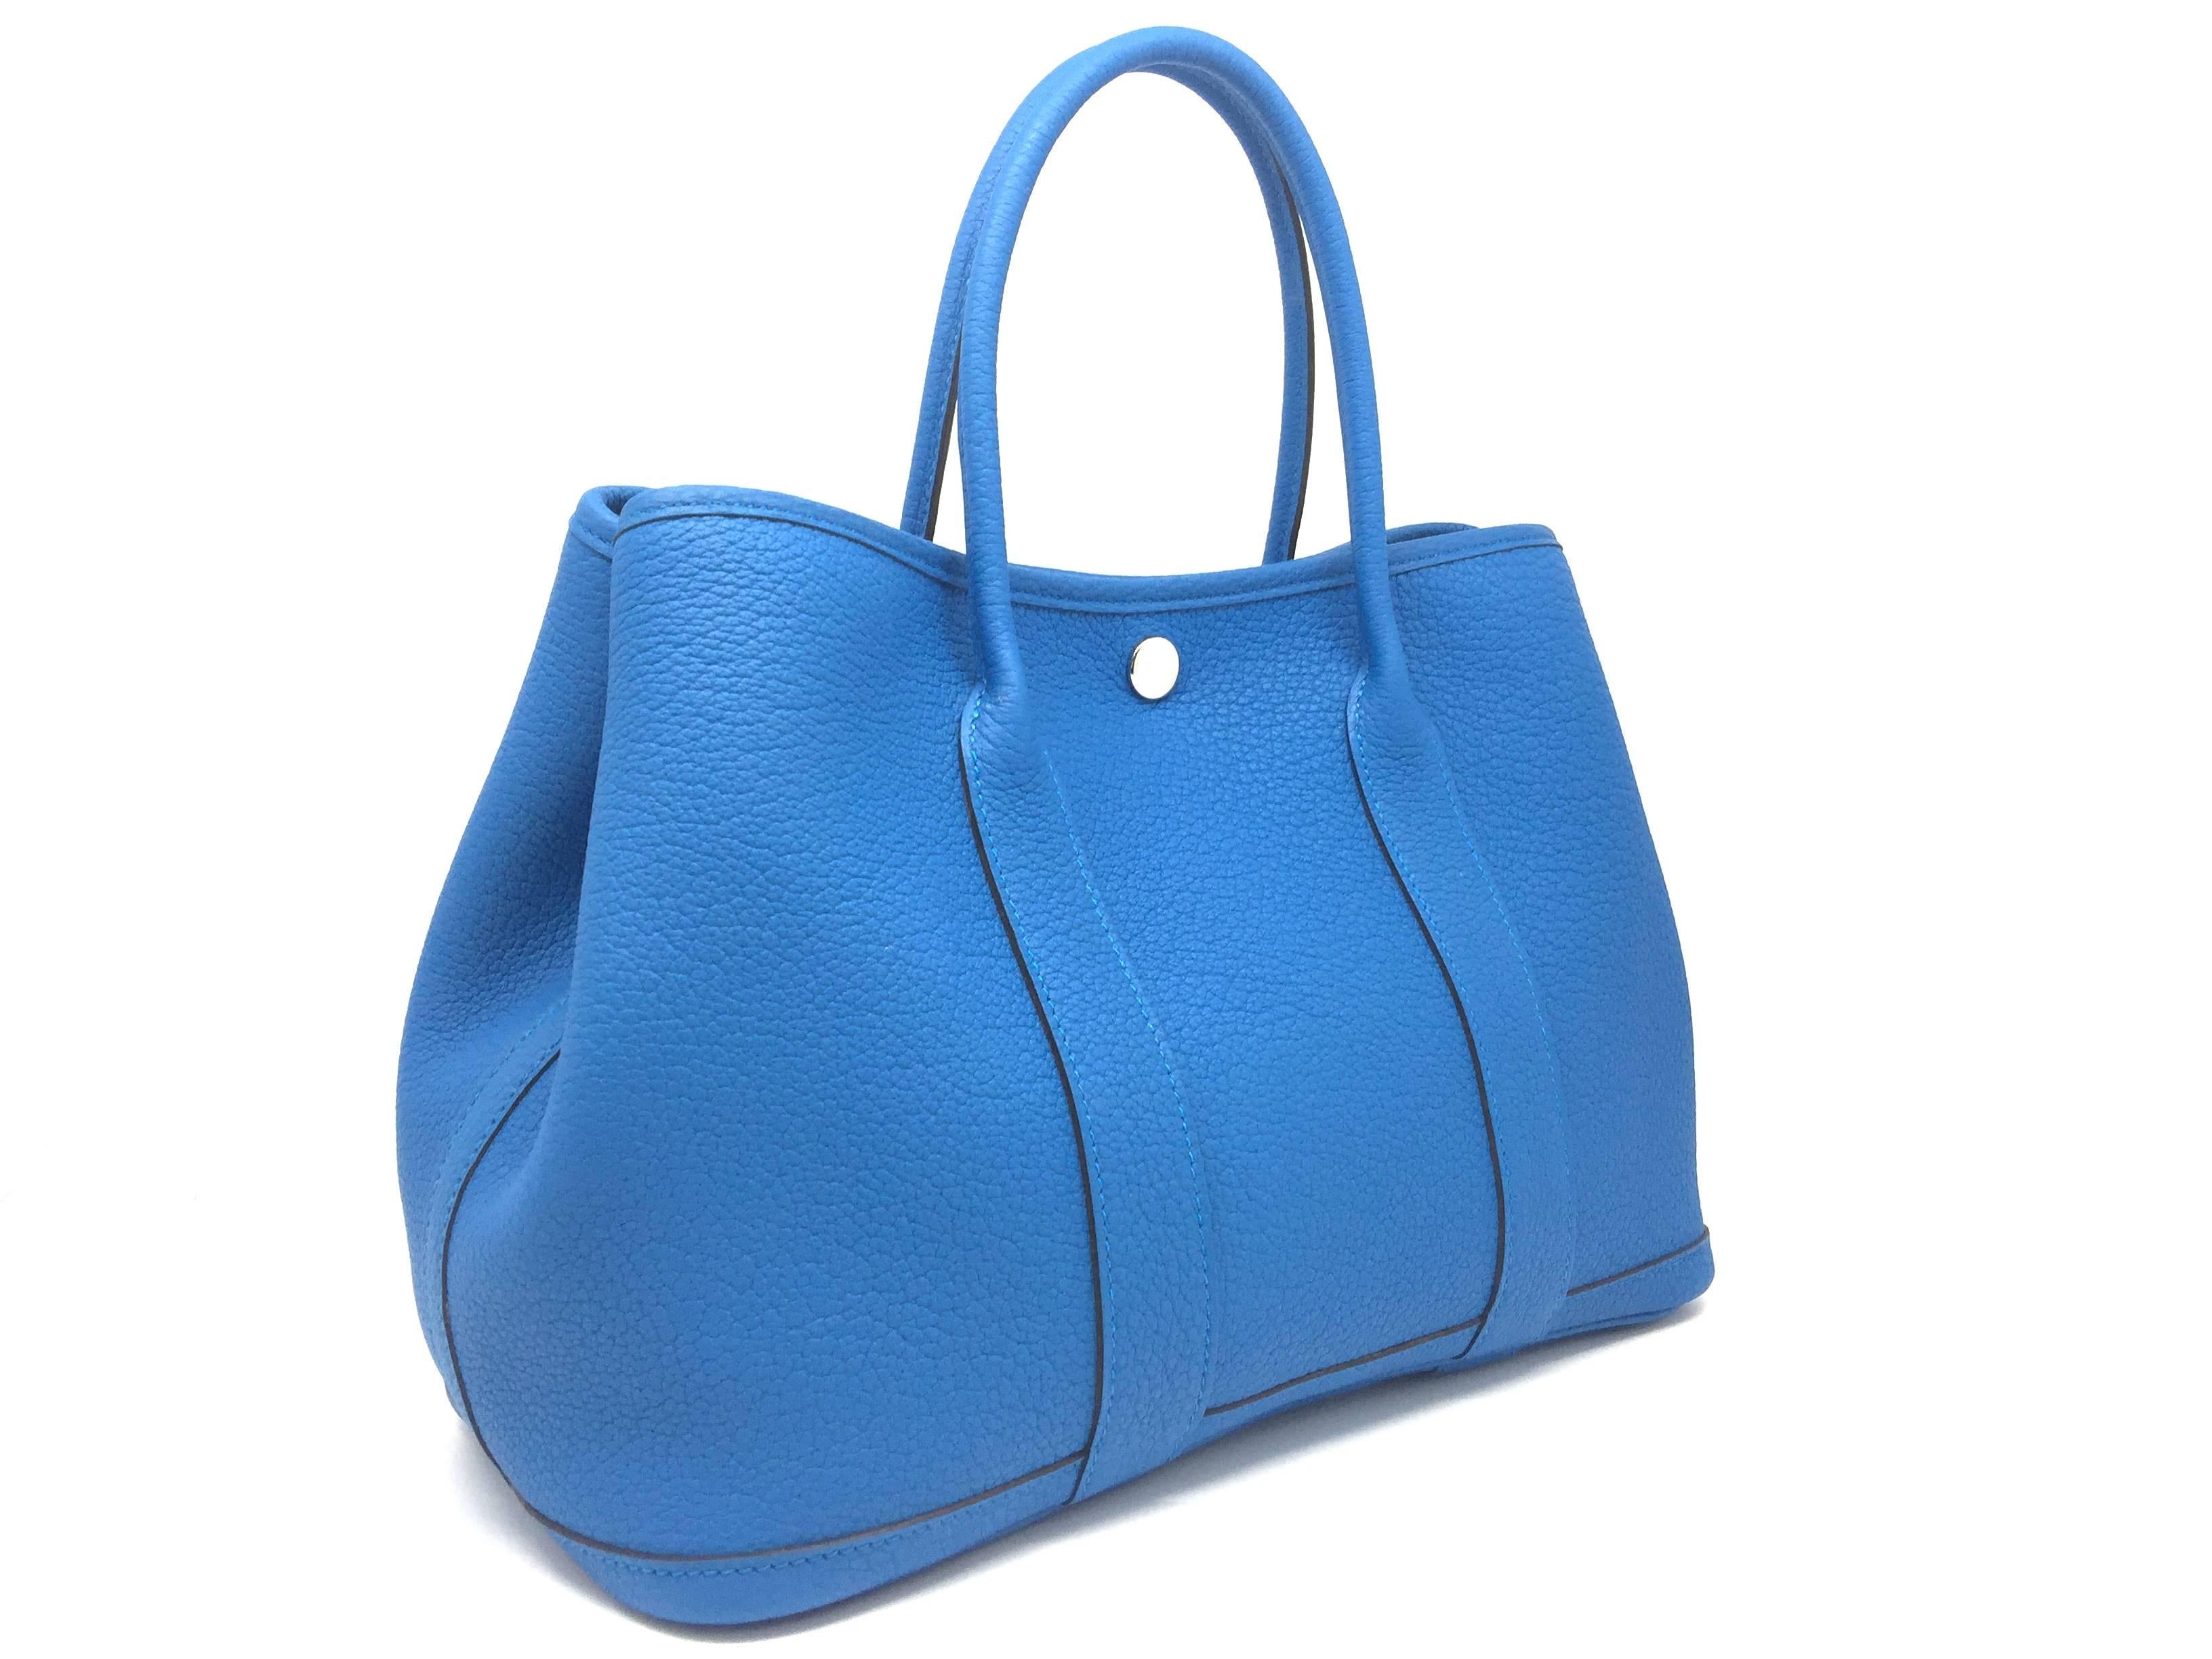 Color: Blue / Bleu Zanzibar (designer color) 

Material: Togo Leather 

Condition: Rank N 
Overall: Brand New 
Surface: Good
Corners: Good
Edges: Good
Handles/Straps: Good
Hardware: Good

Dimension: W30 × H21 × D14cm（W11.8" × H8.2" ×